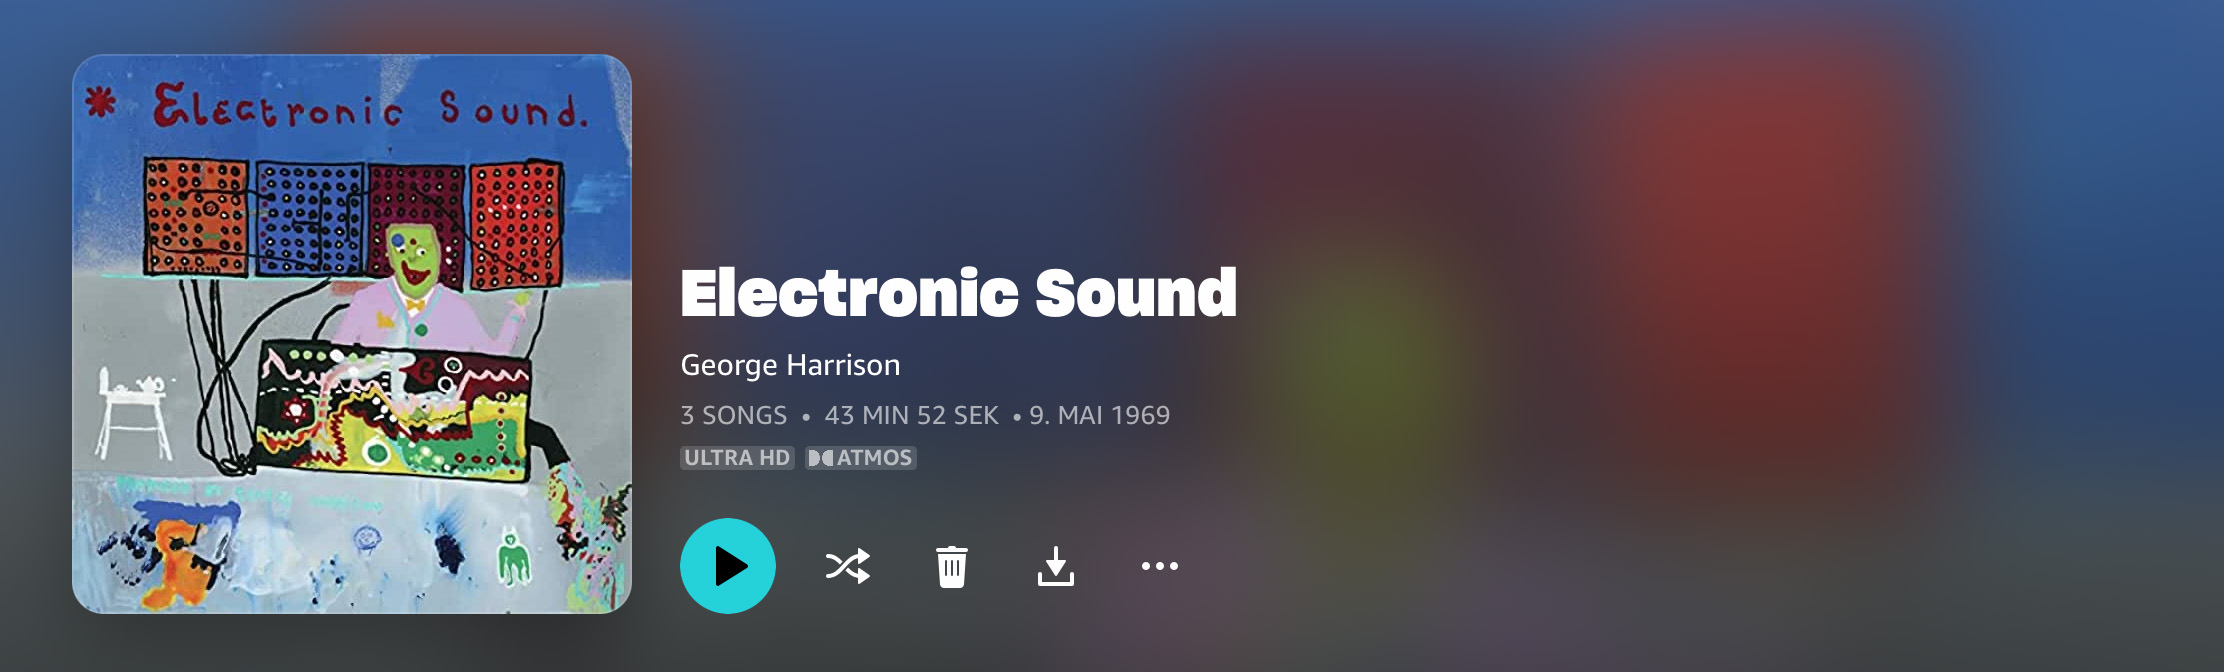 George Harrison Electronic Sound